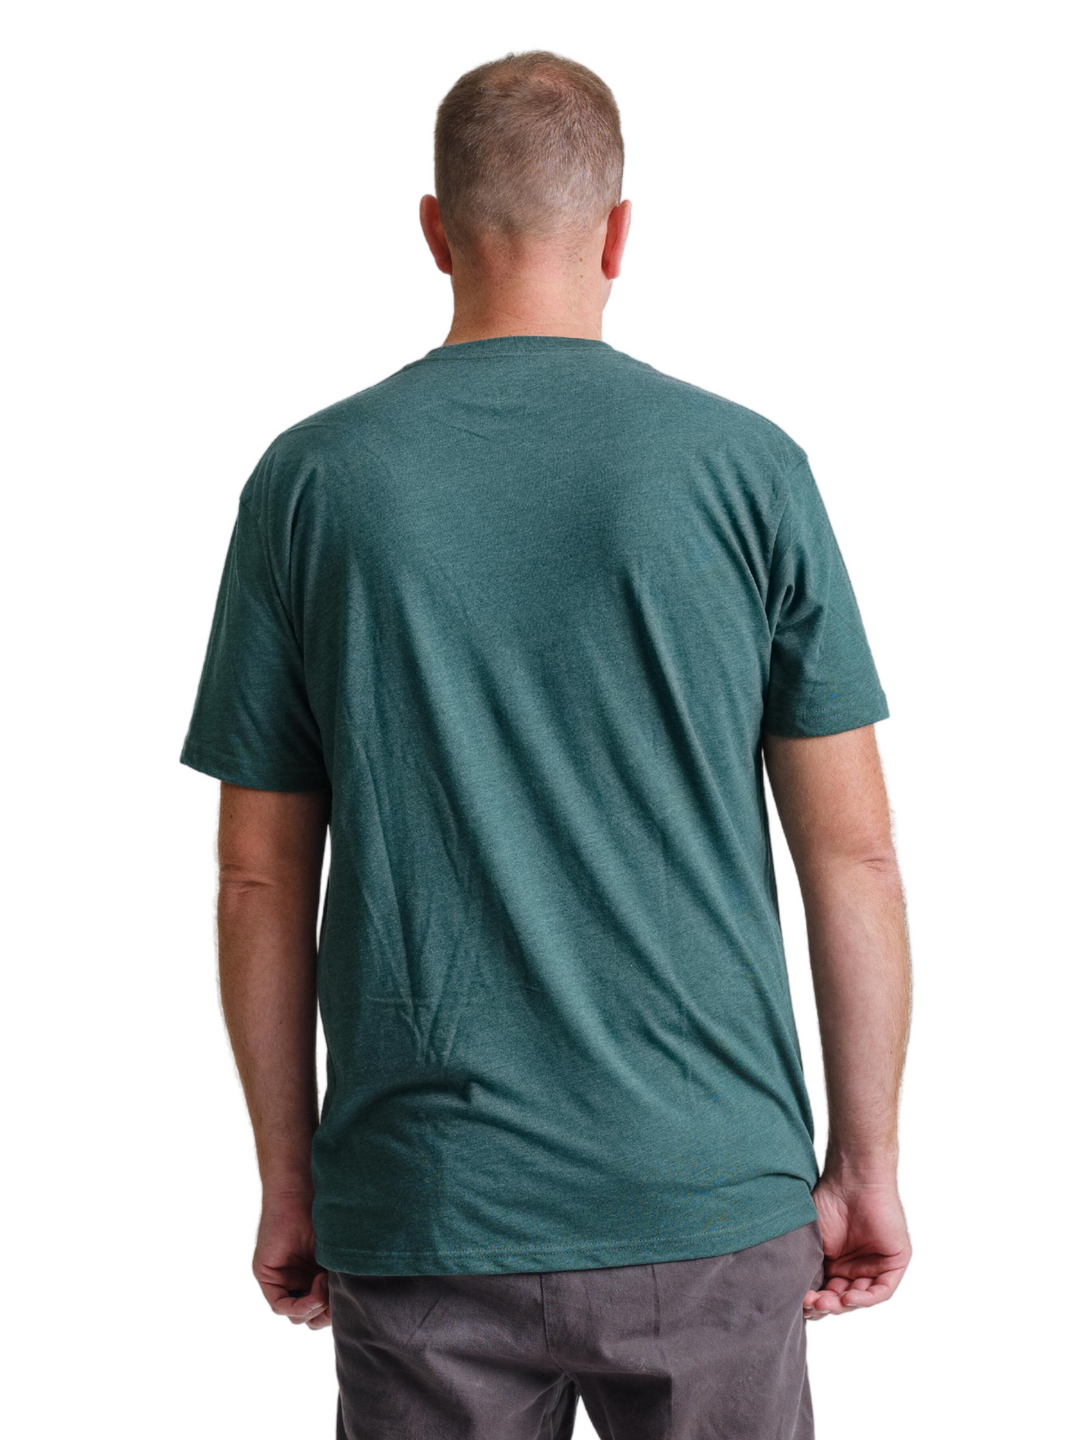 Back of Nudge Printing green MSU Shirt